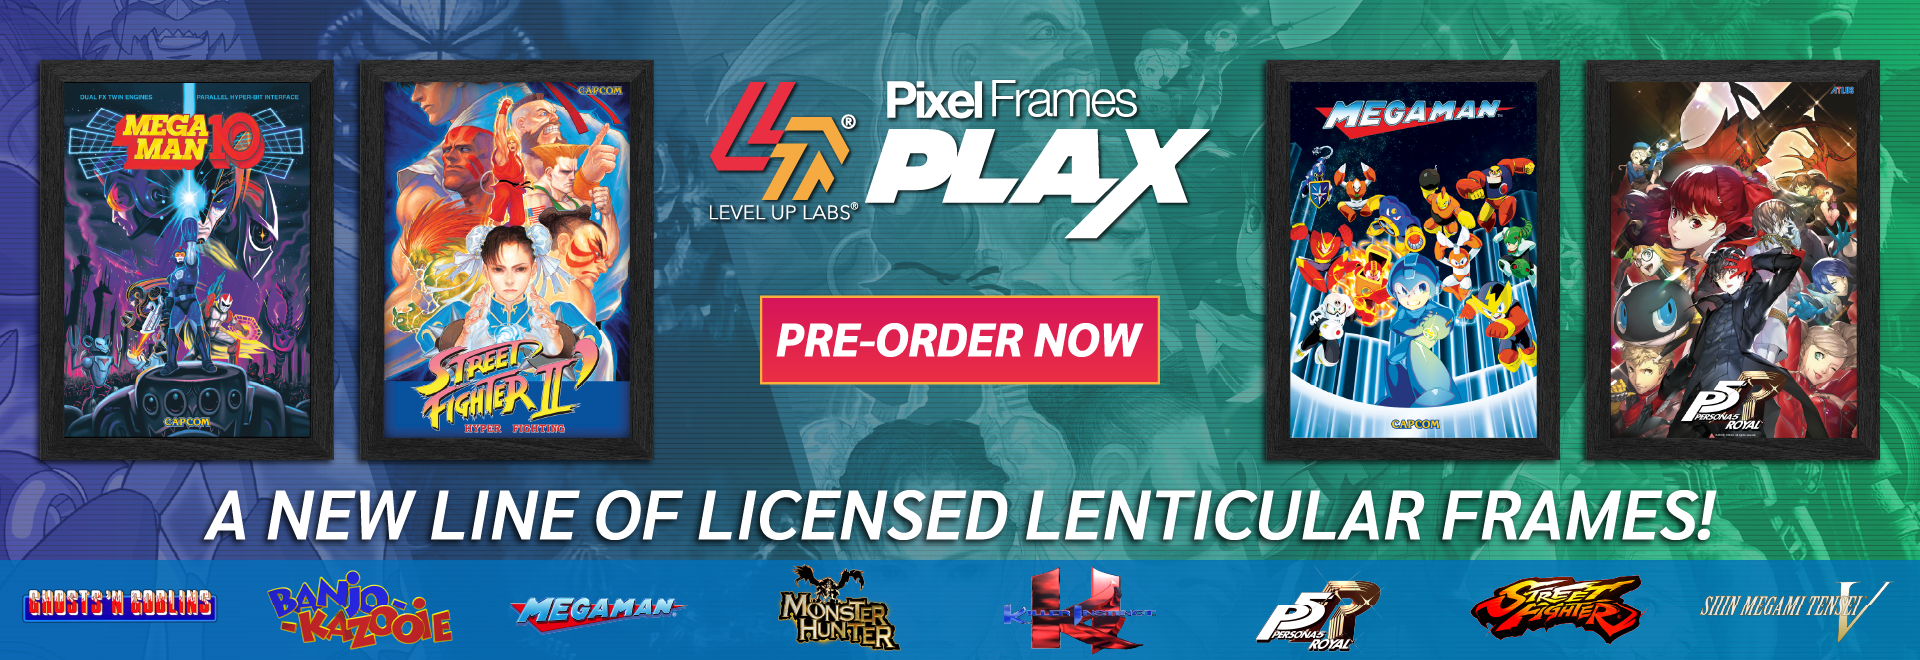 Introducing a new line of 3D lenticular frames - Plax!